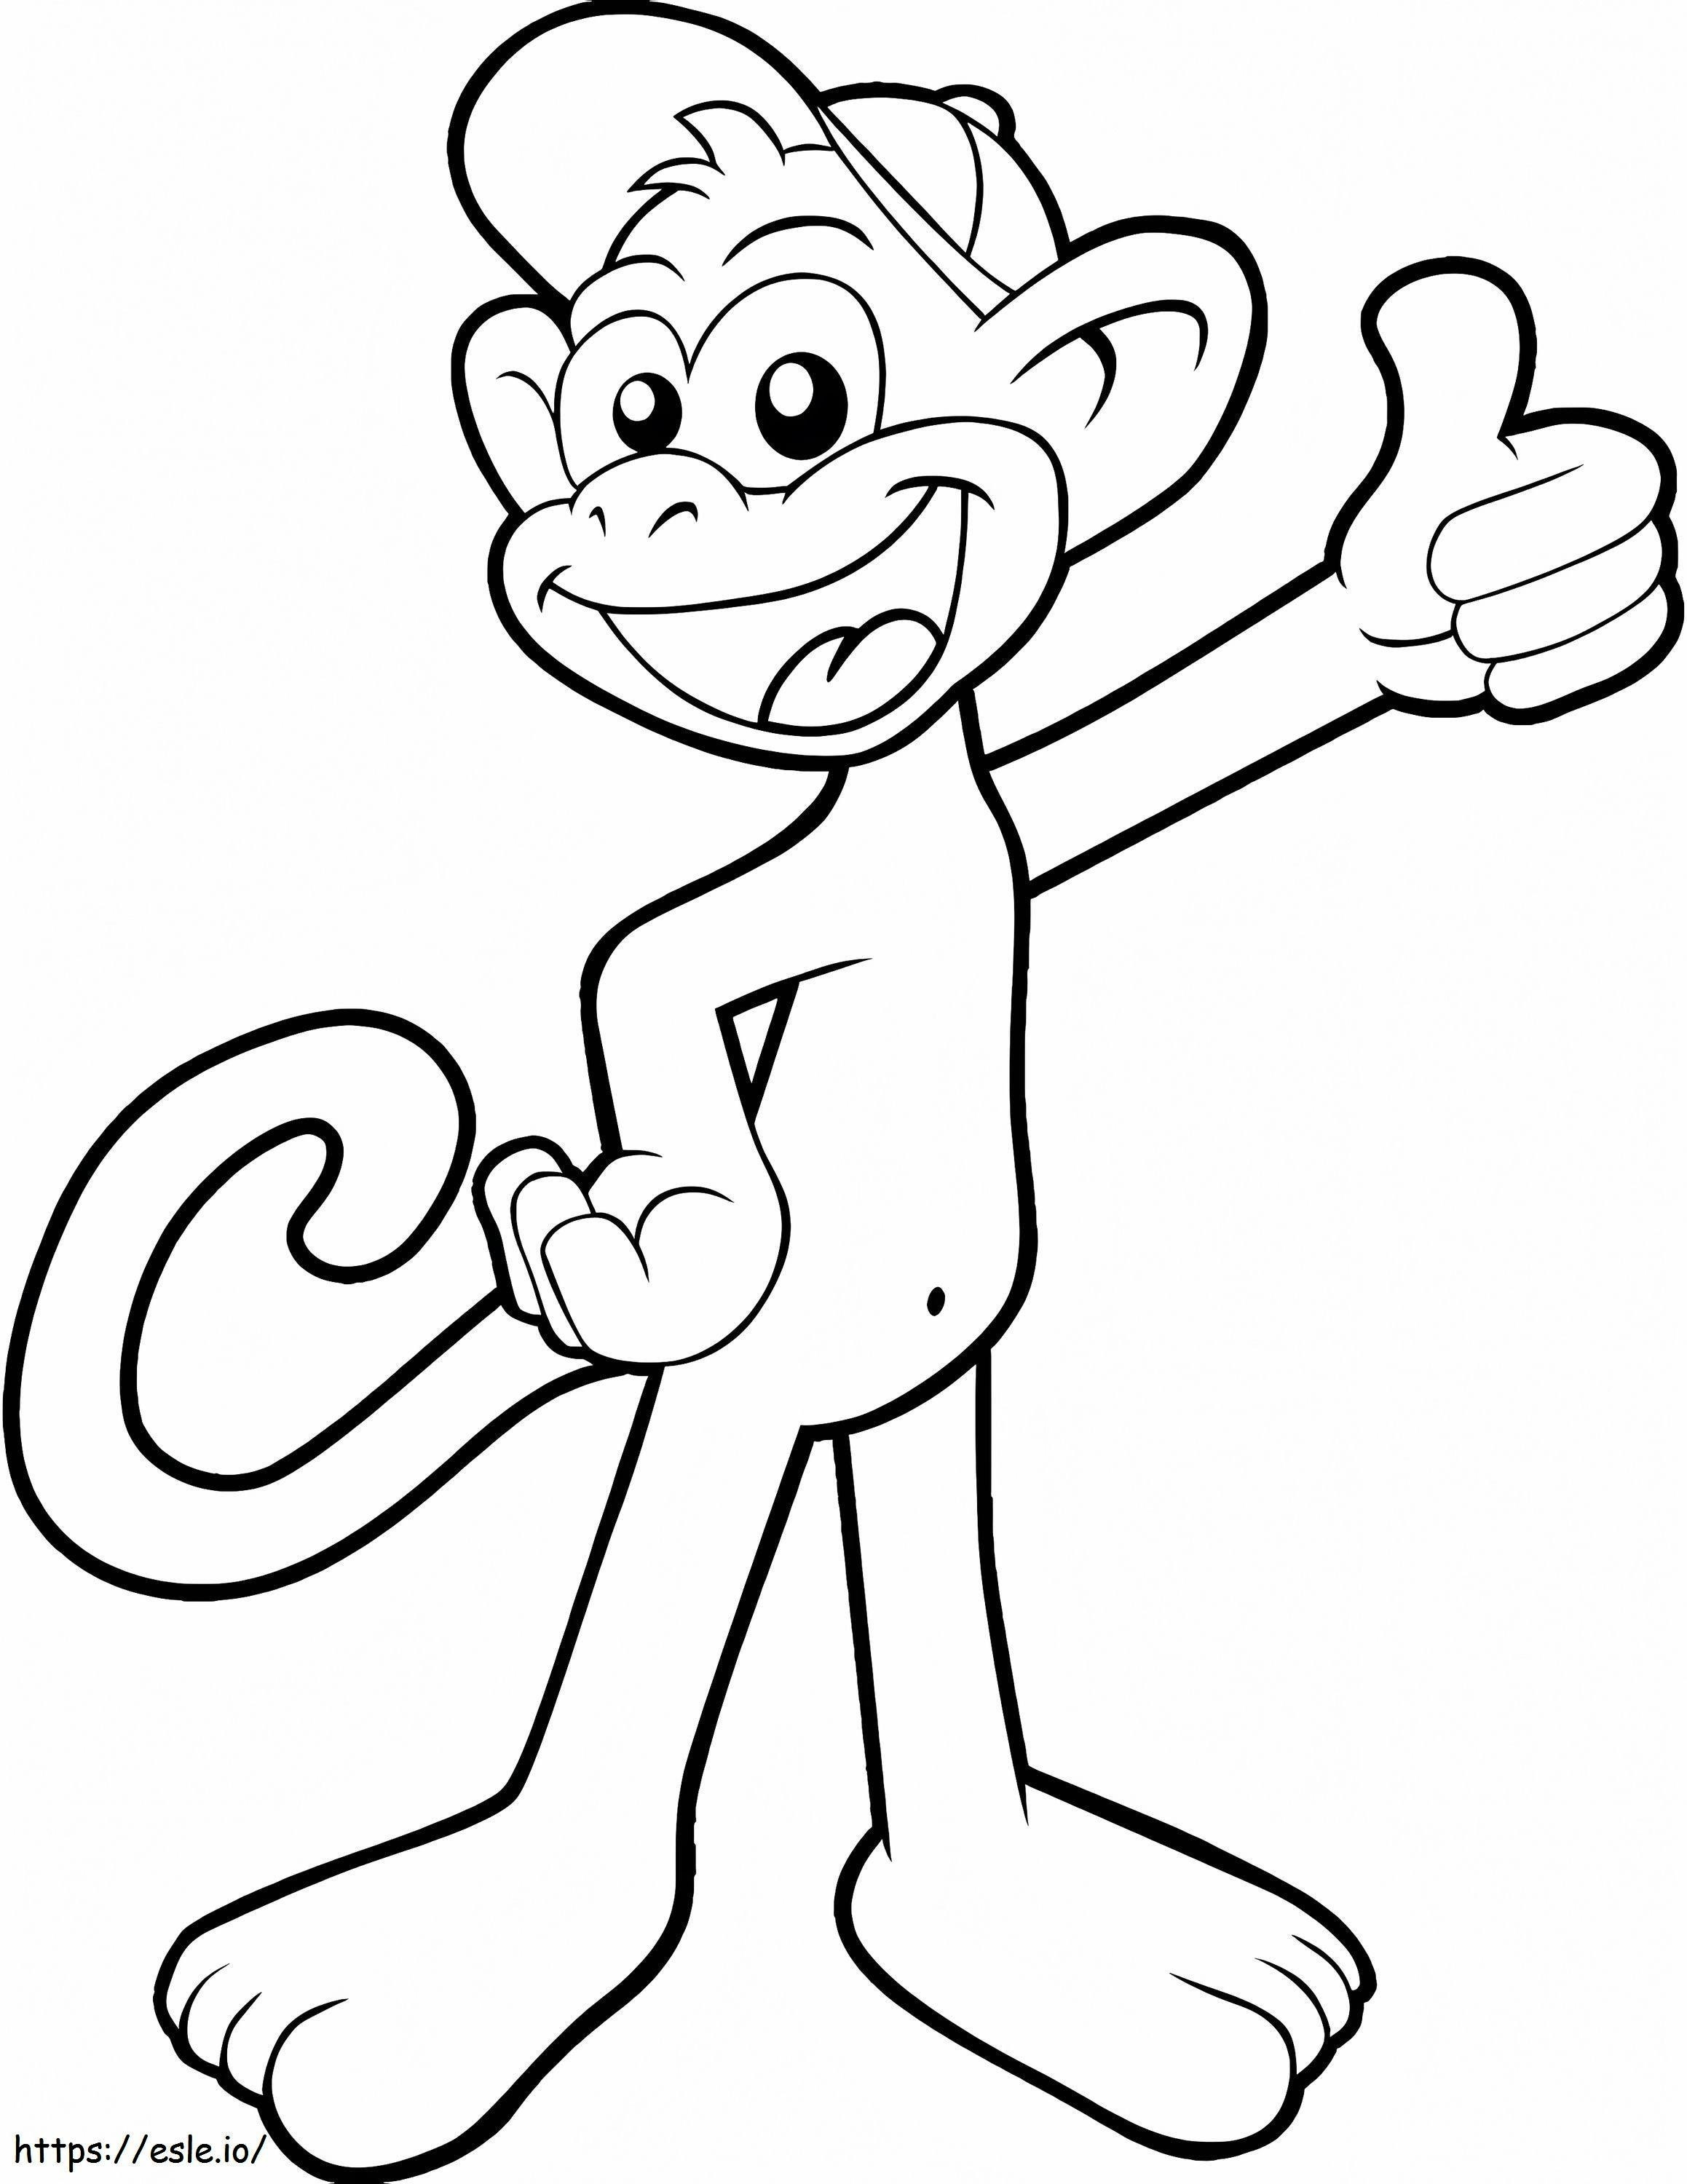 Macaco de desenho animado feliz para colorir